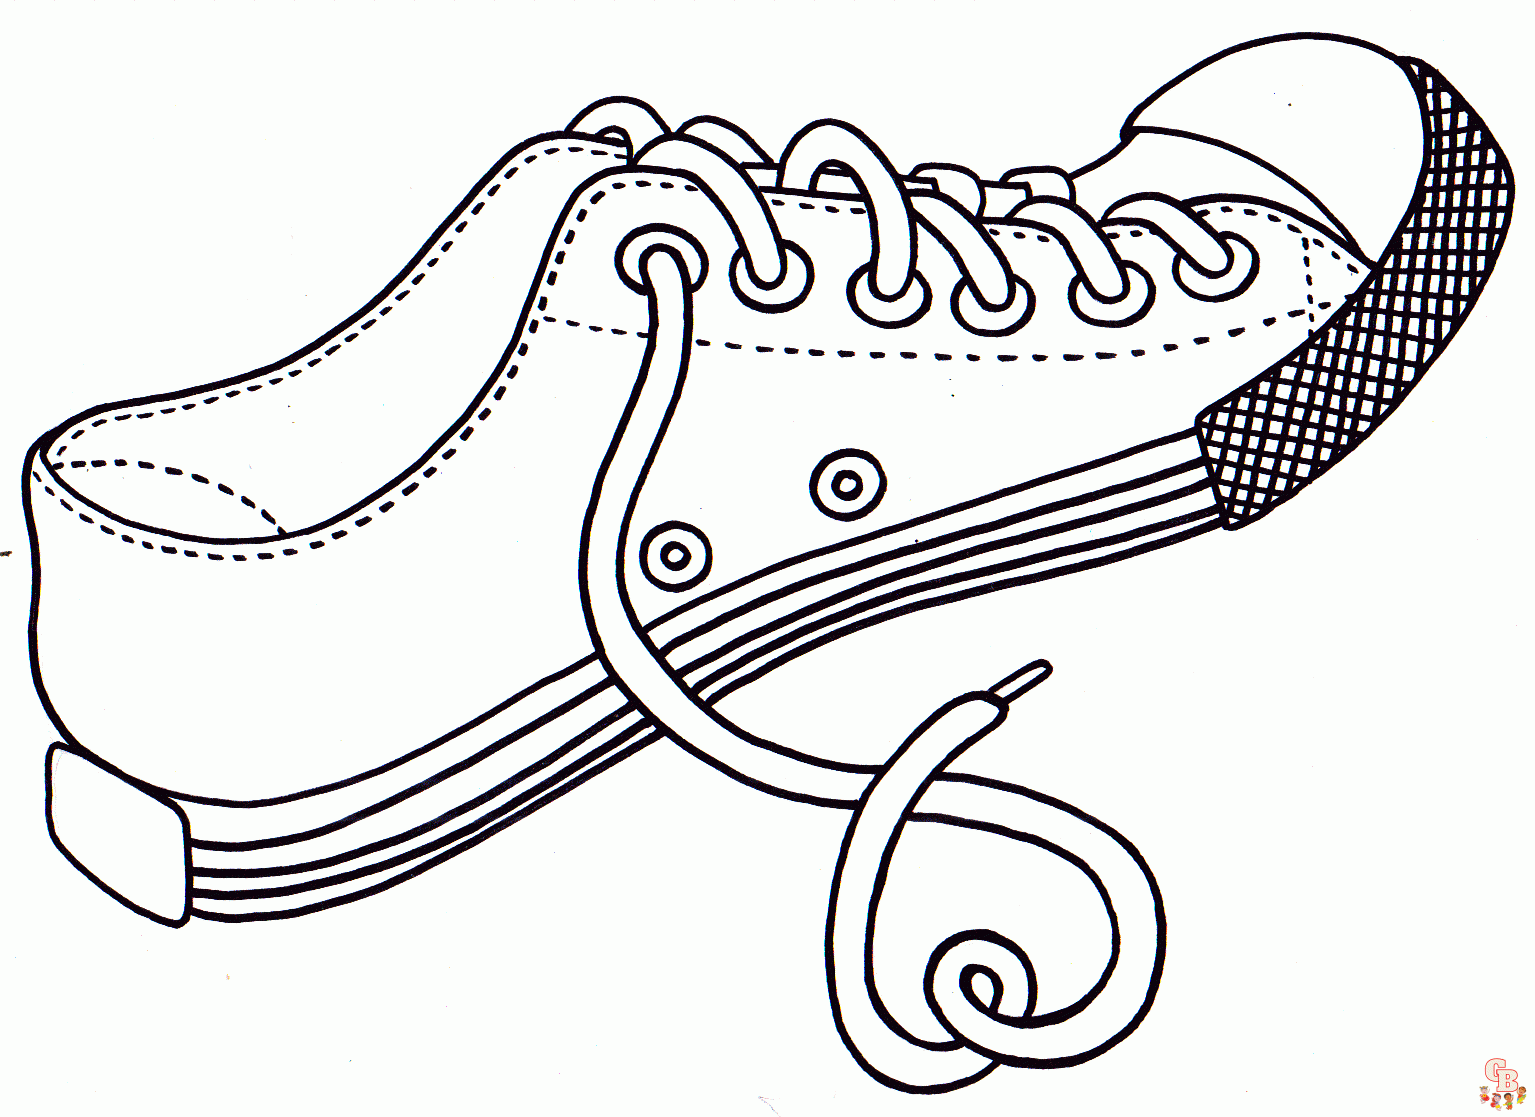 Shoe coloring pages 1